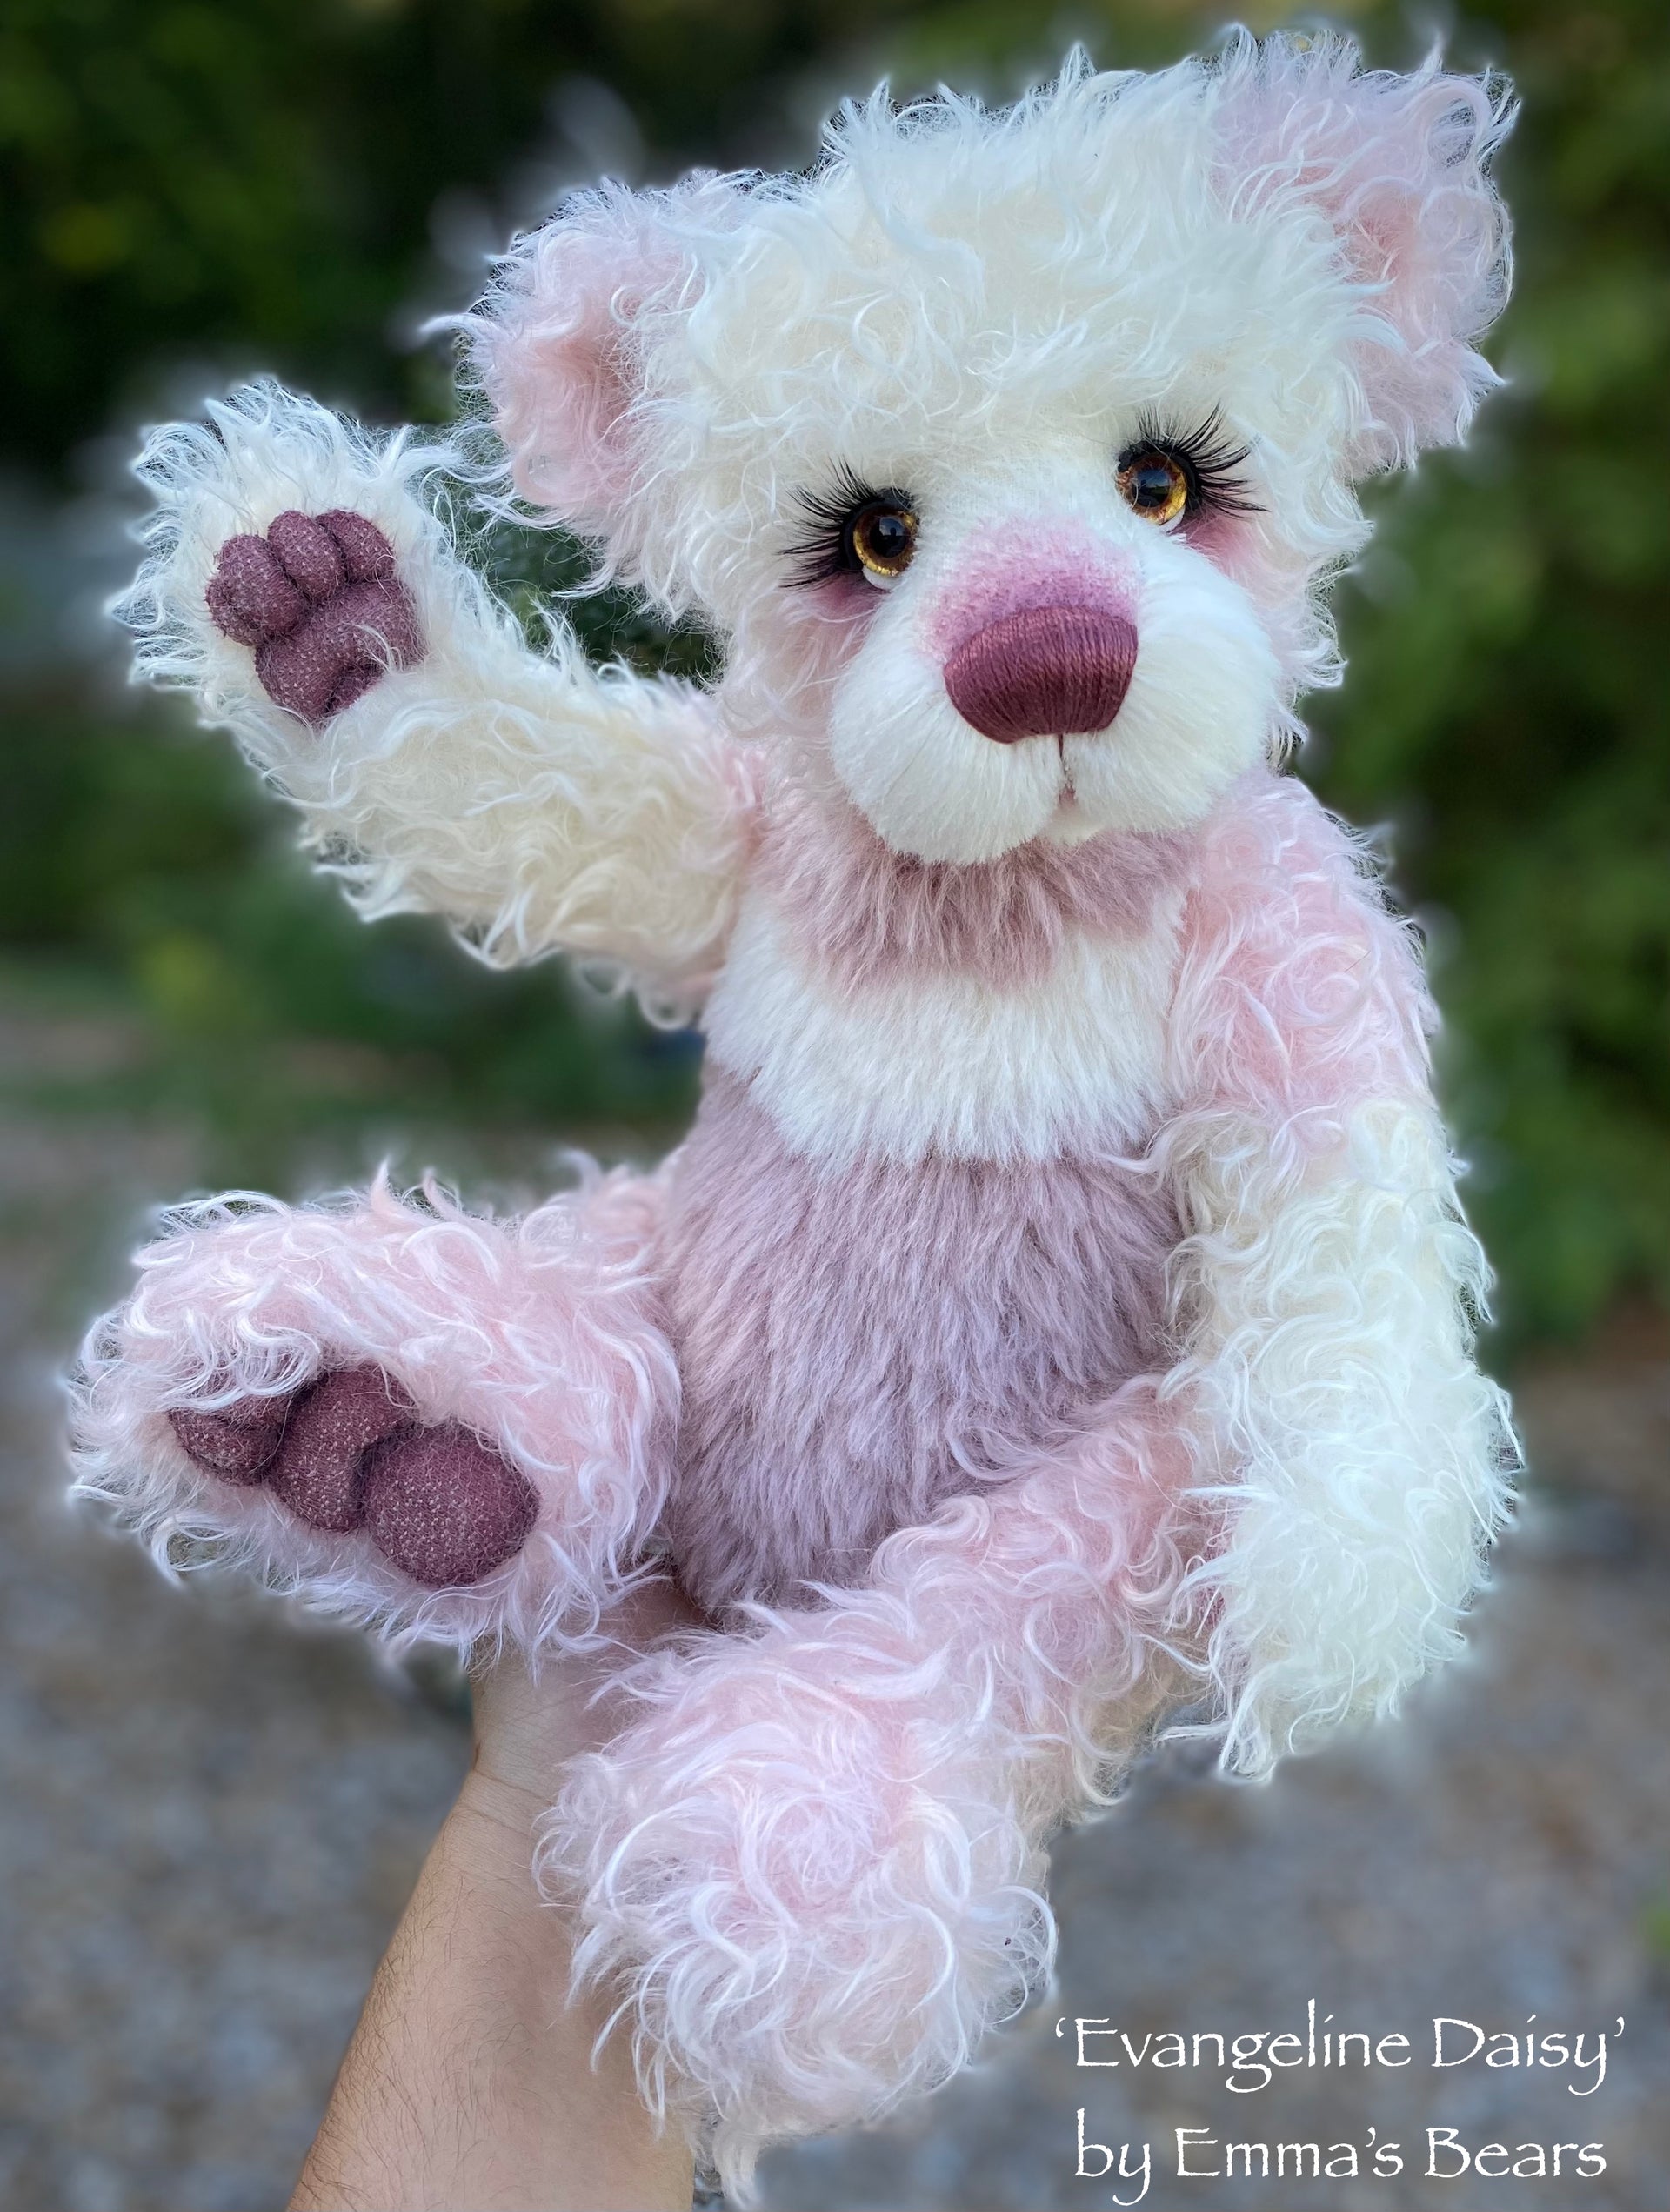 Evangeline Daisy - 17" Hand-Dyed Mohair Artist Baby Bear by Emma's Bears - OOAK